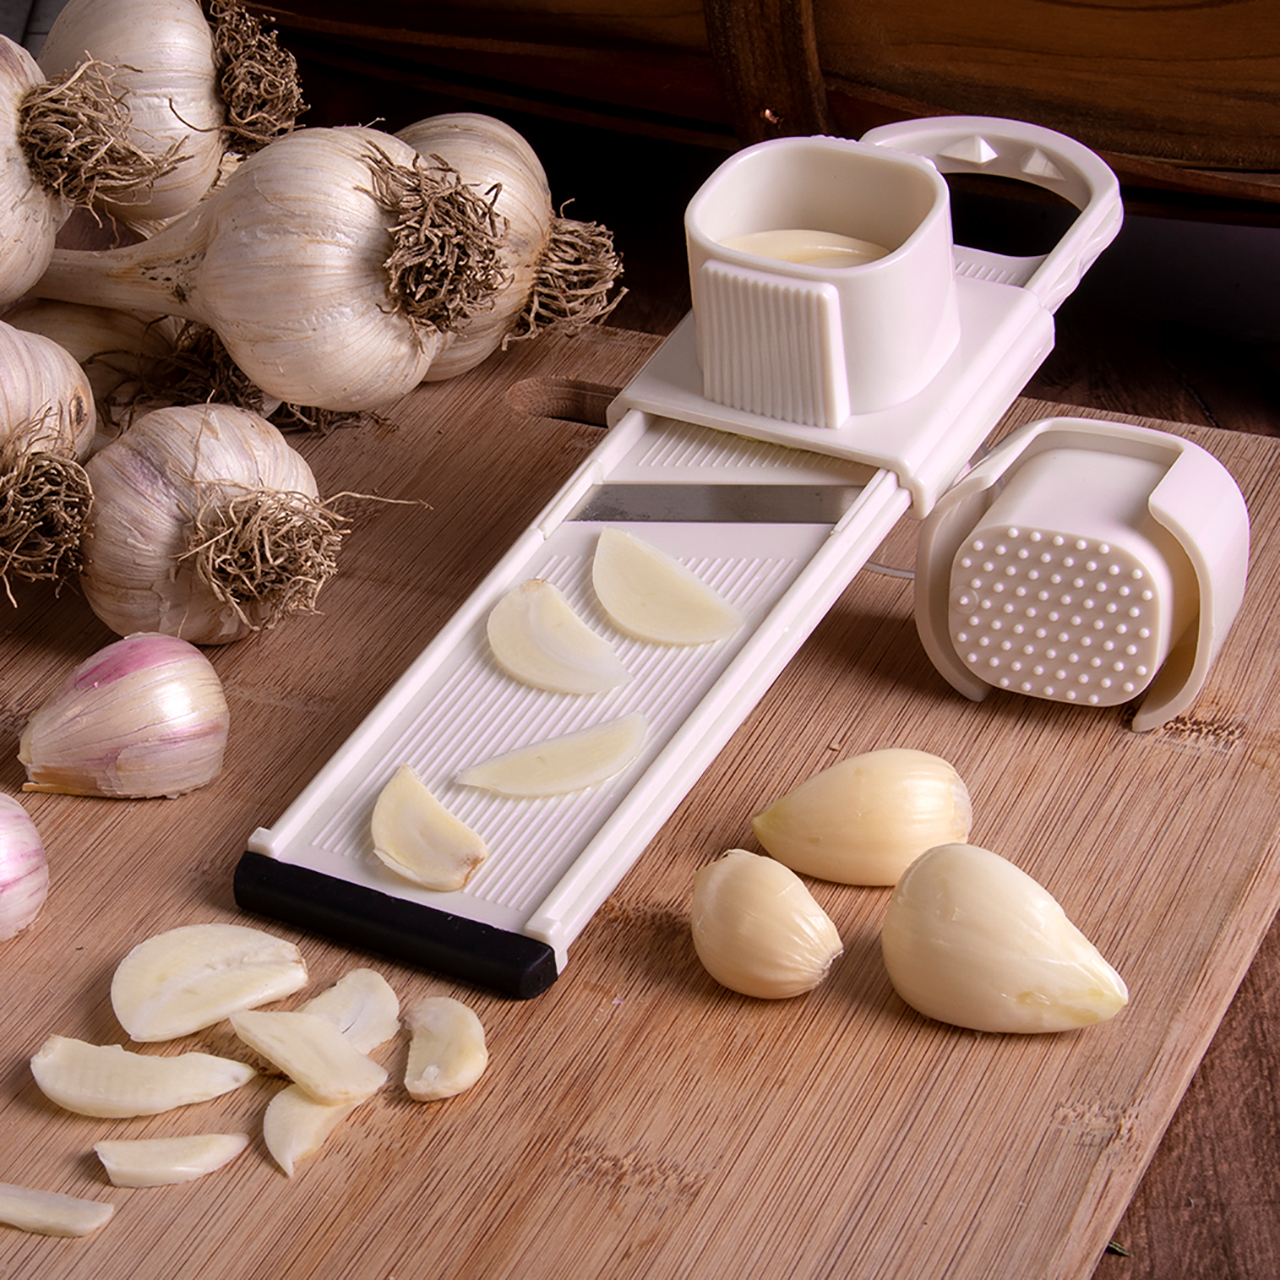  OXO Good Grips Garlic Slicer,White: Home & Kitchen